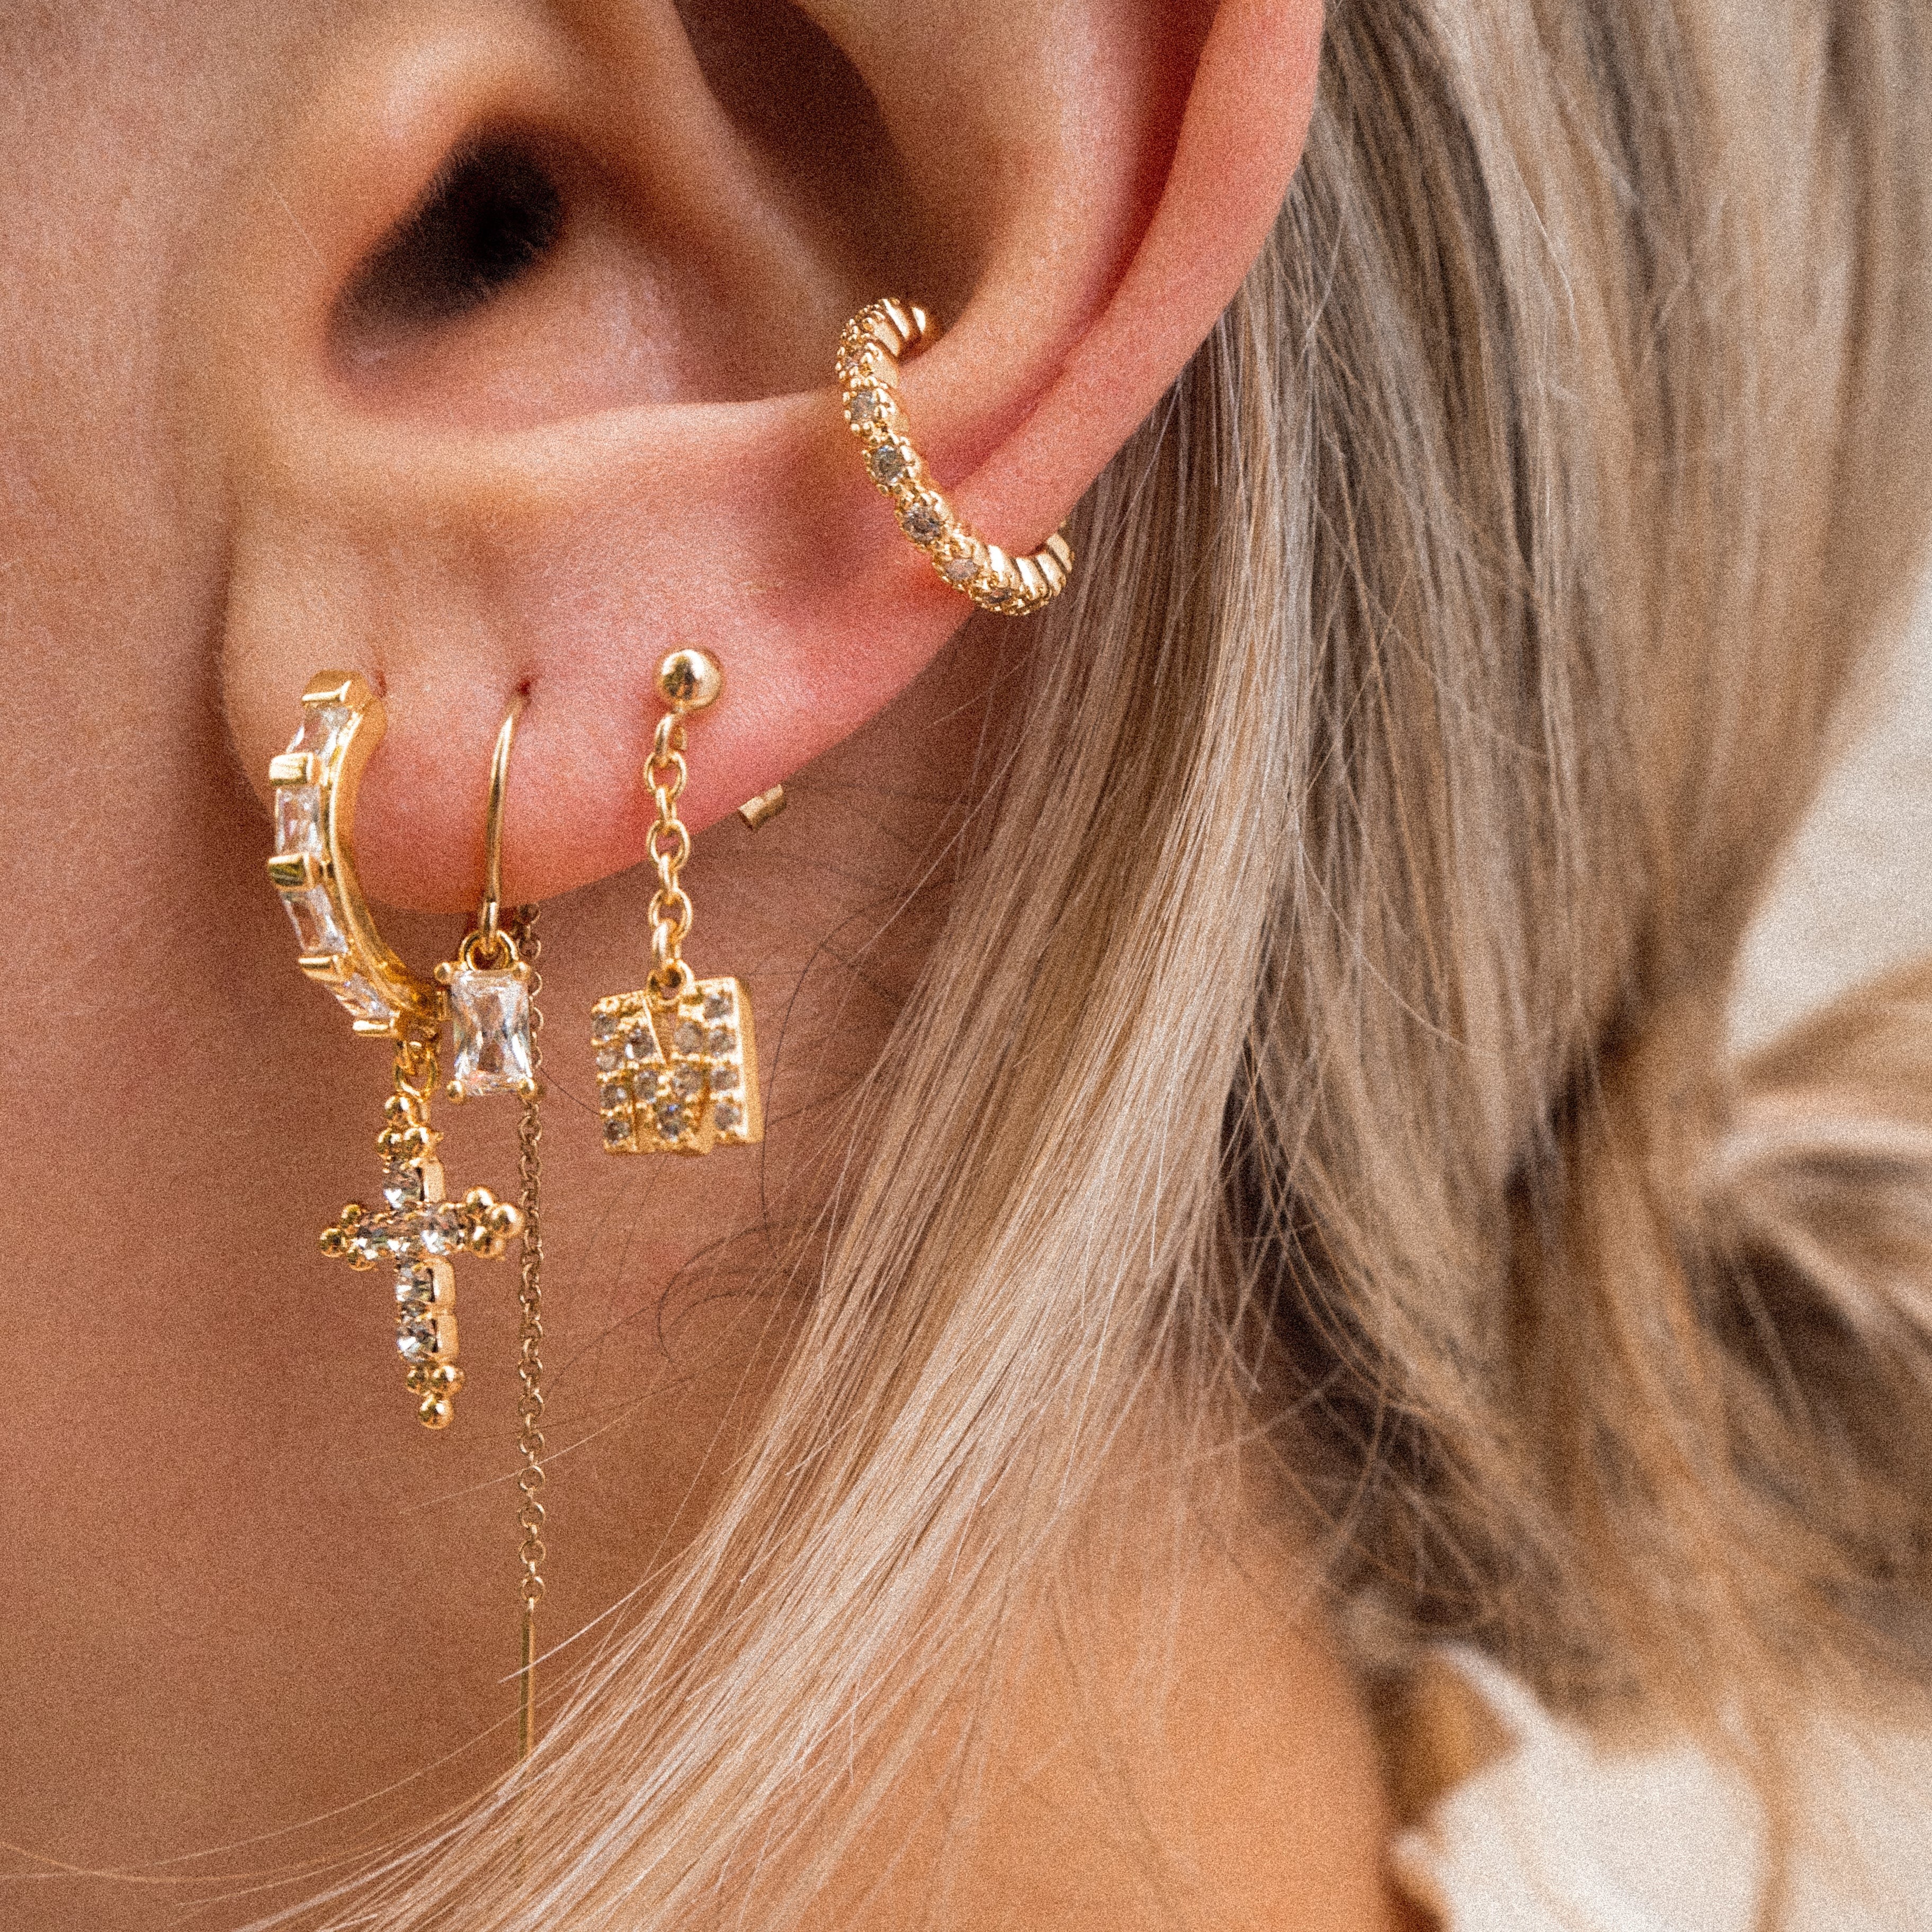 dainty threader earring, cz threader, dainty earring, gold filled earring, gold threader earring, stacking earring, ear stack, threader earrings, threader chain earring, gold filled threader, cz threader, cz baguette earring, dainty earring, gold filled earring, dainty threader earring, dainty wholesale jewelry, dainty jewelry, dainty earrings, chain earrings, multiple piercing earrings, double piercing earring, gold chain earring